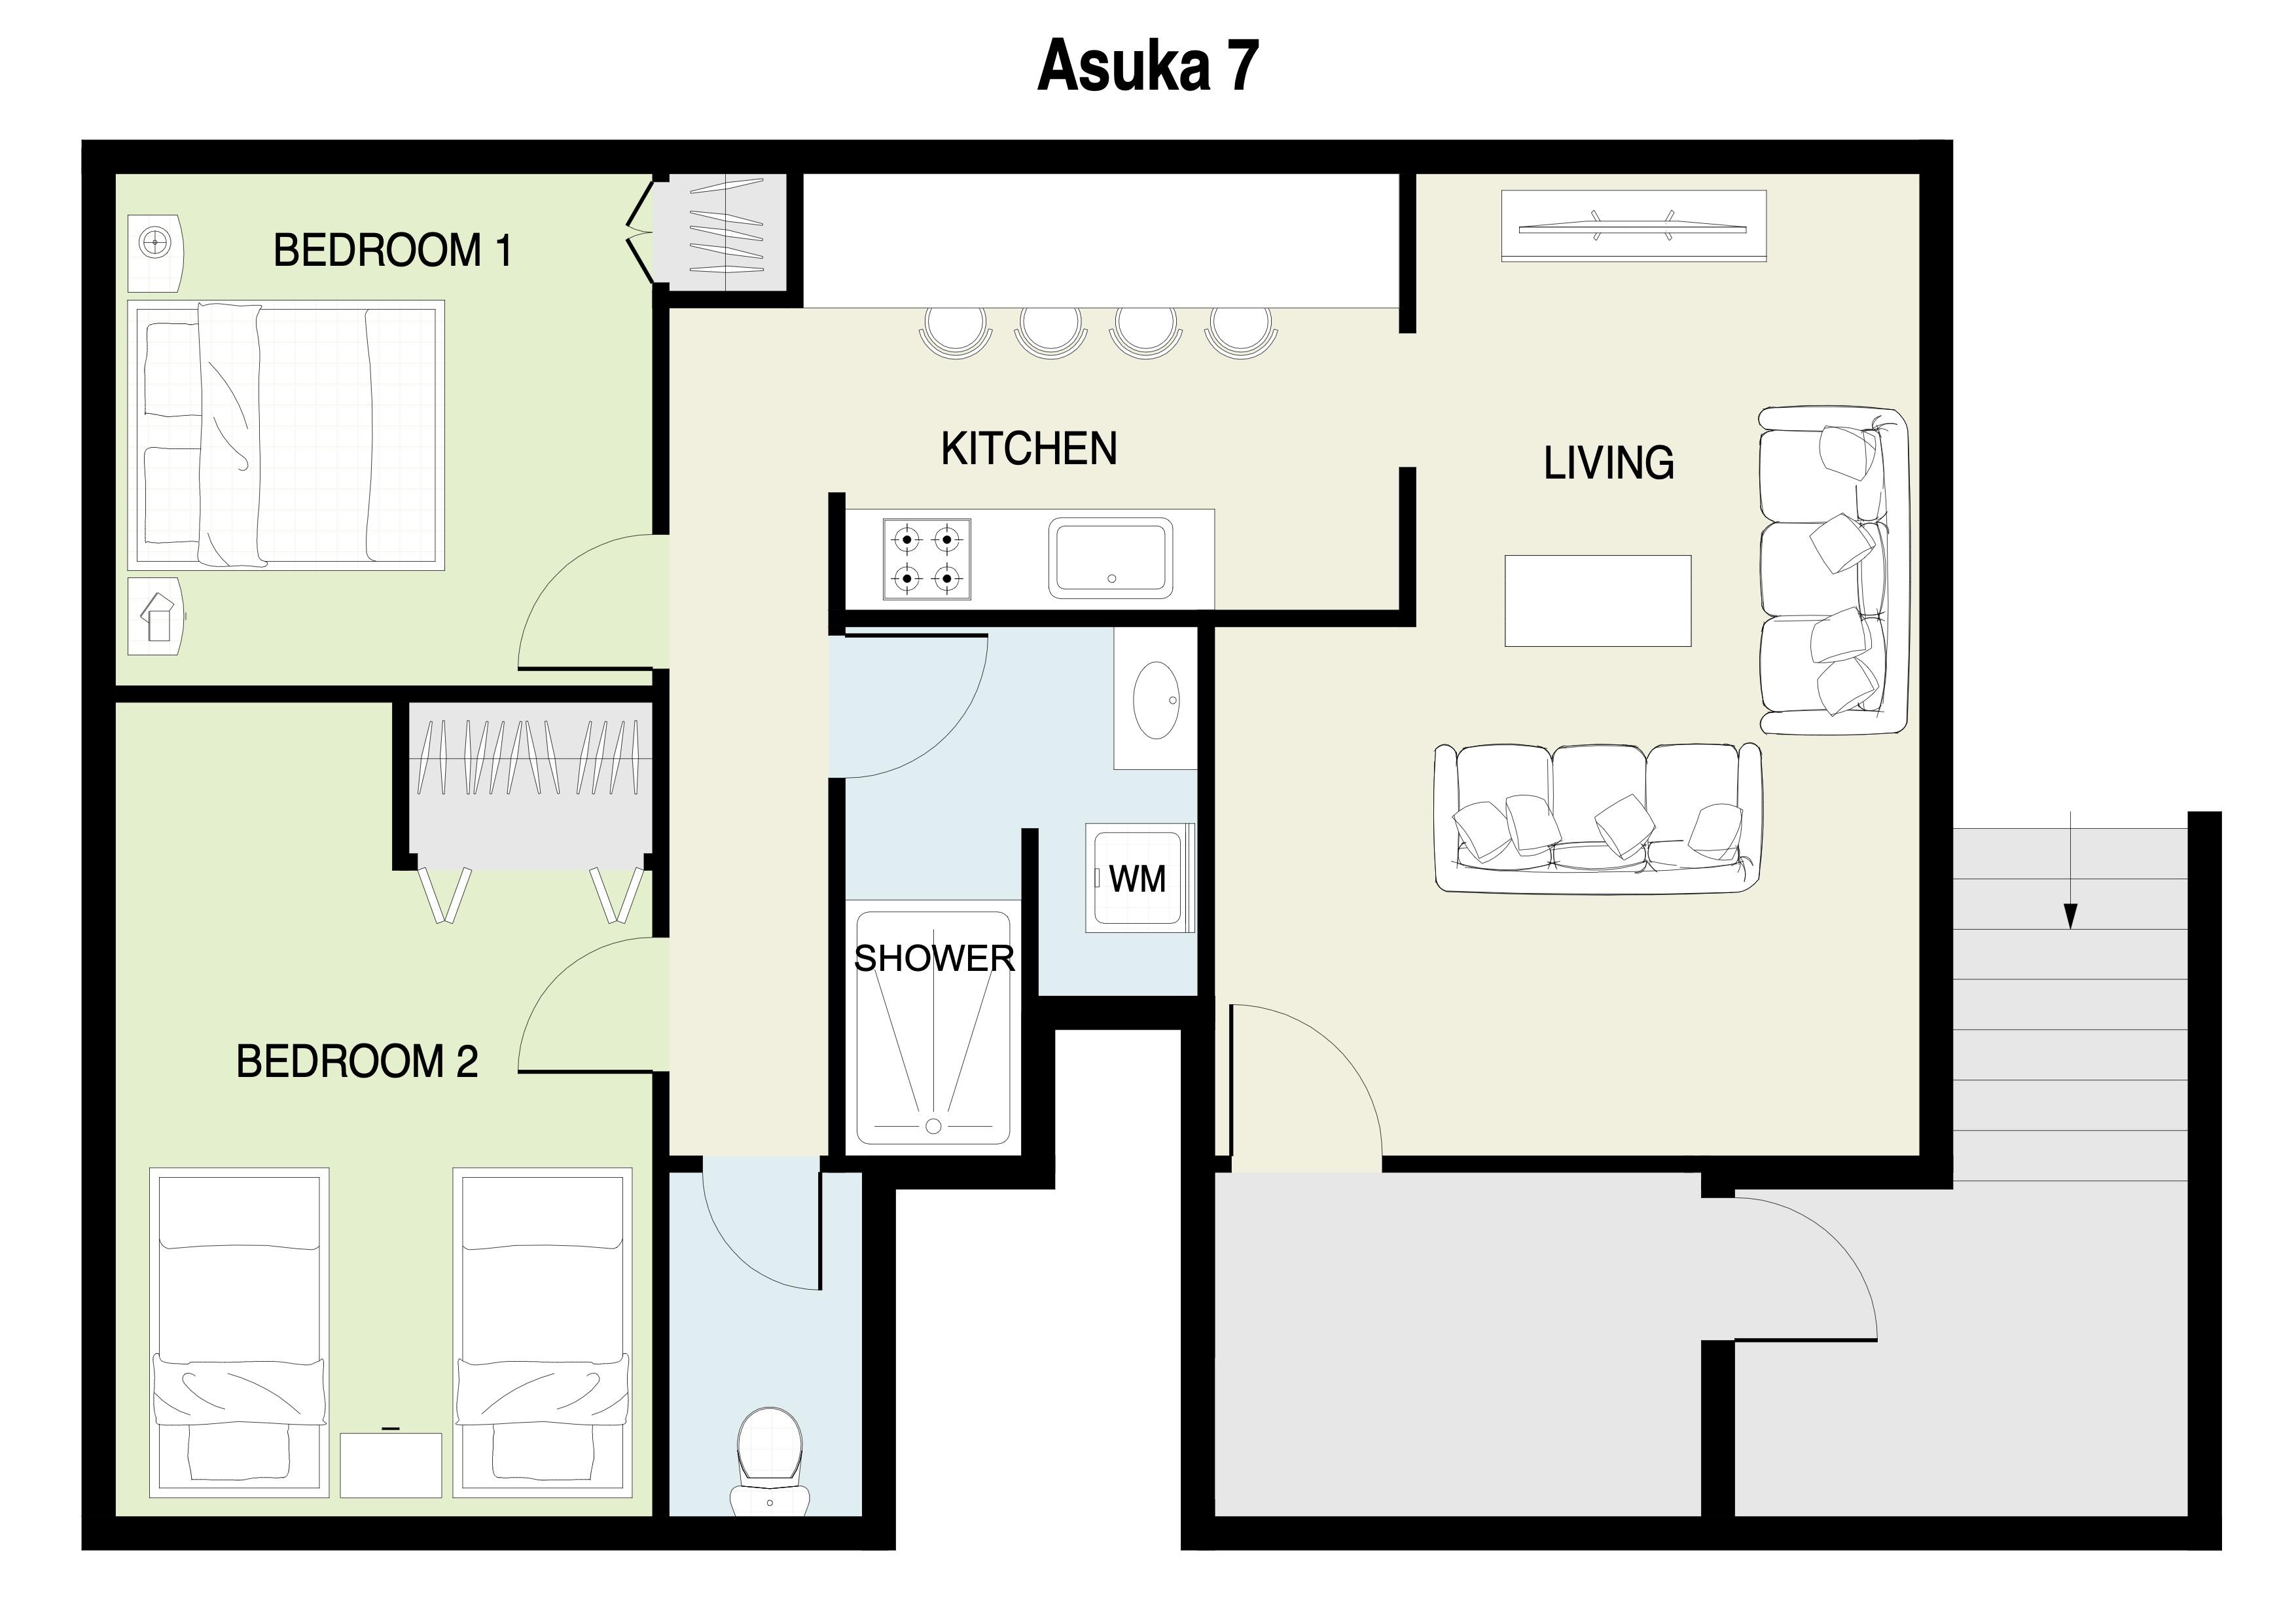 Asuka 7 Floor Plan